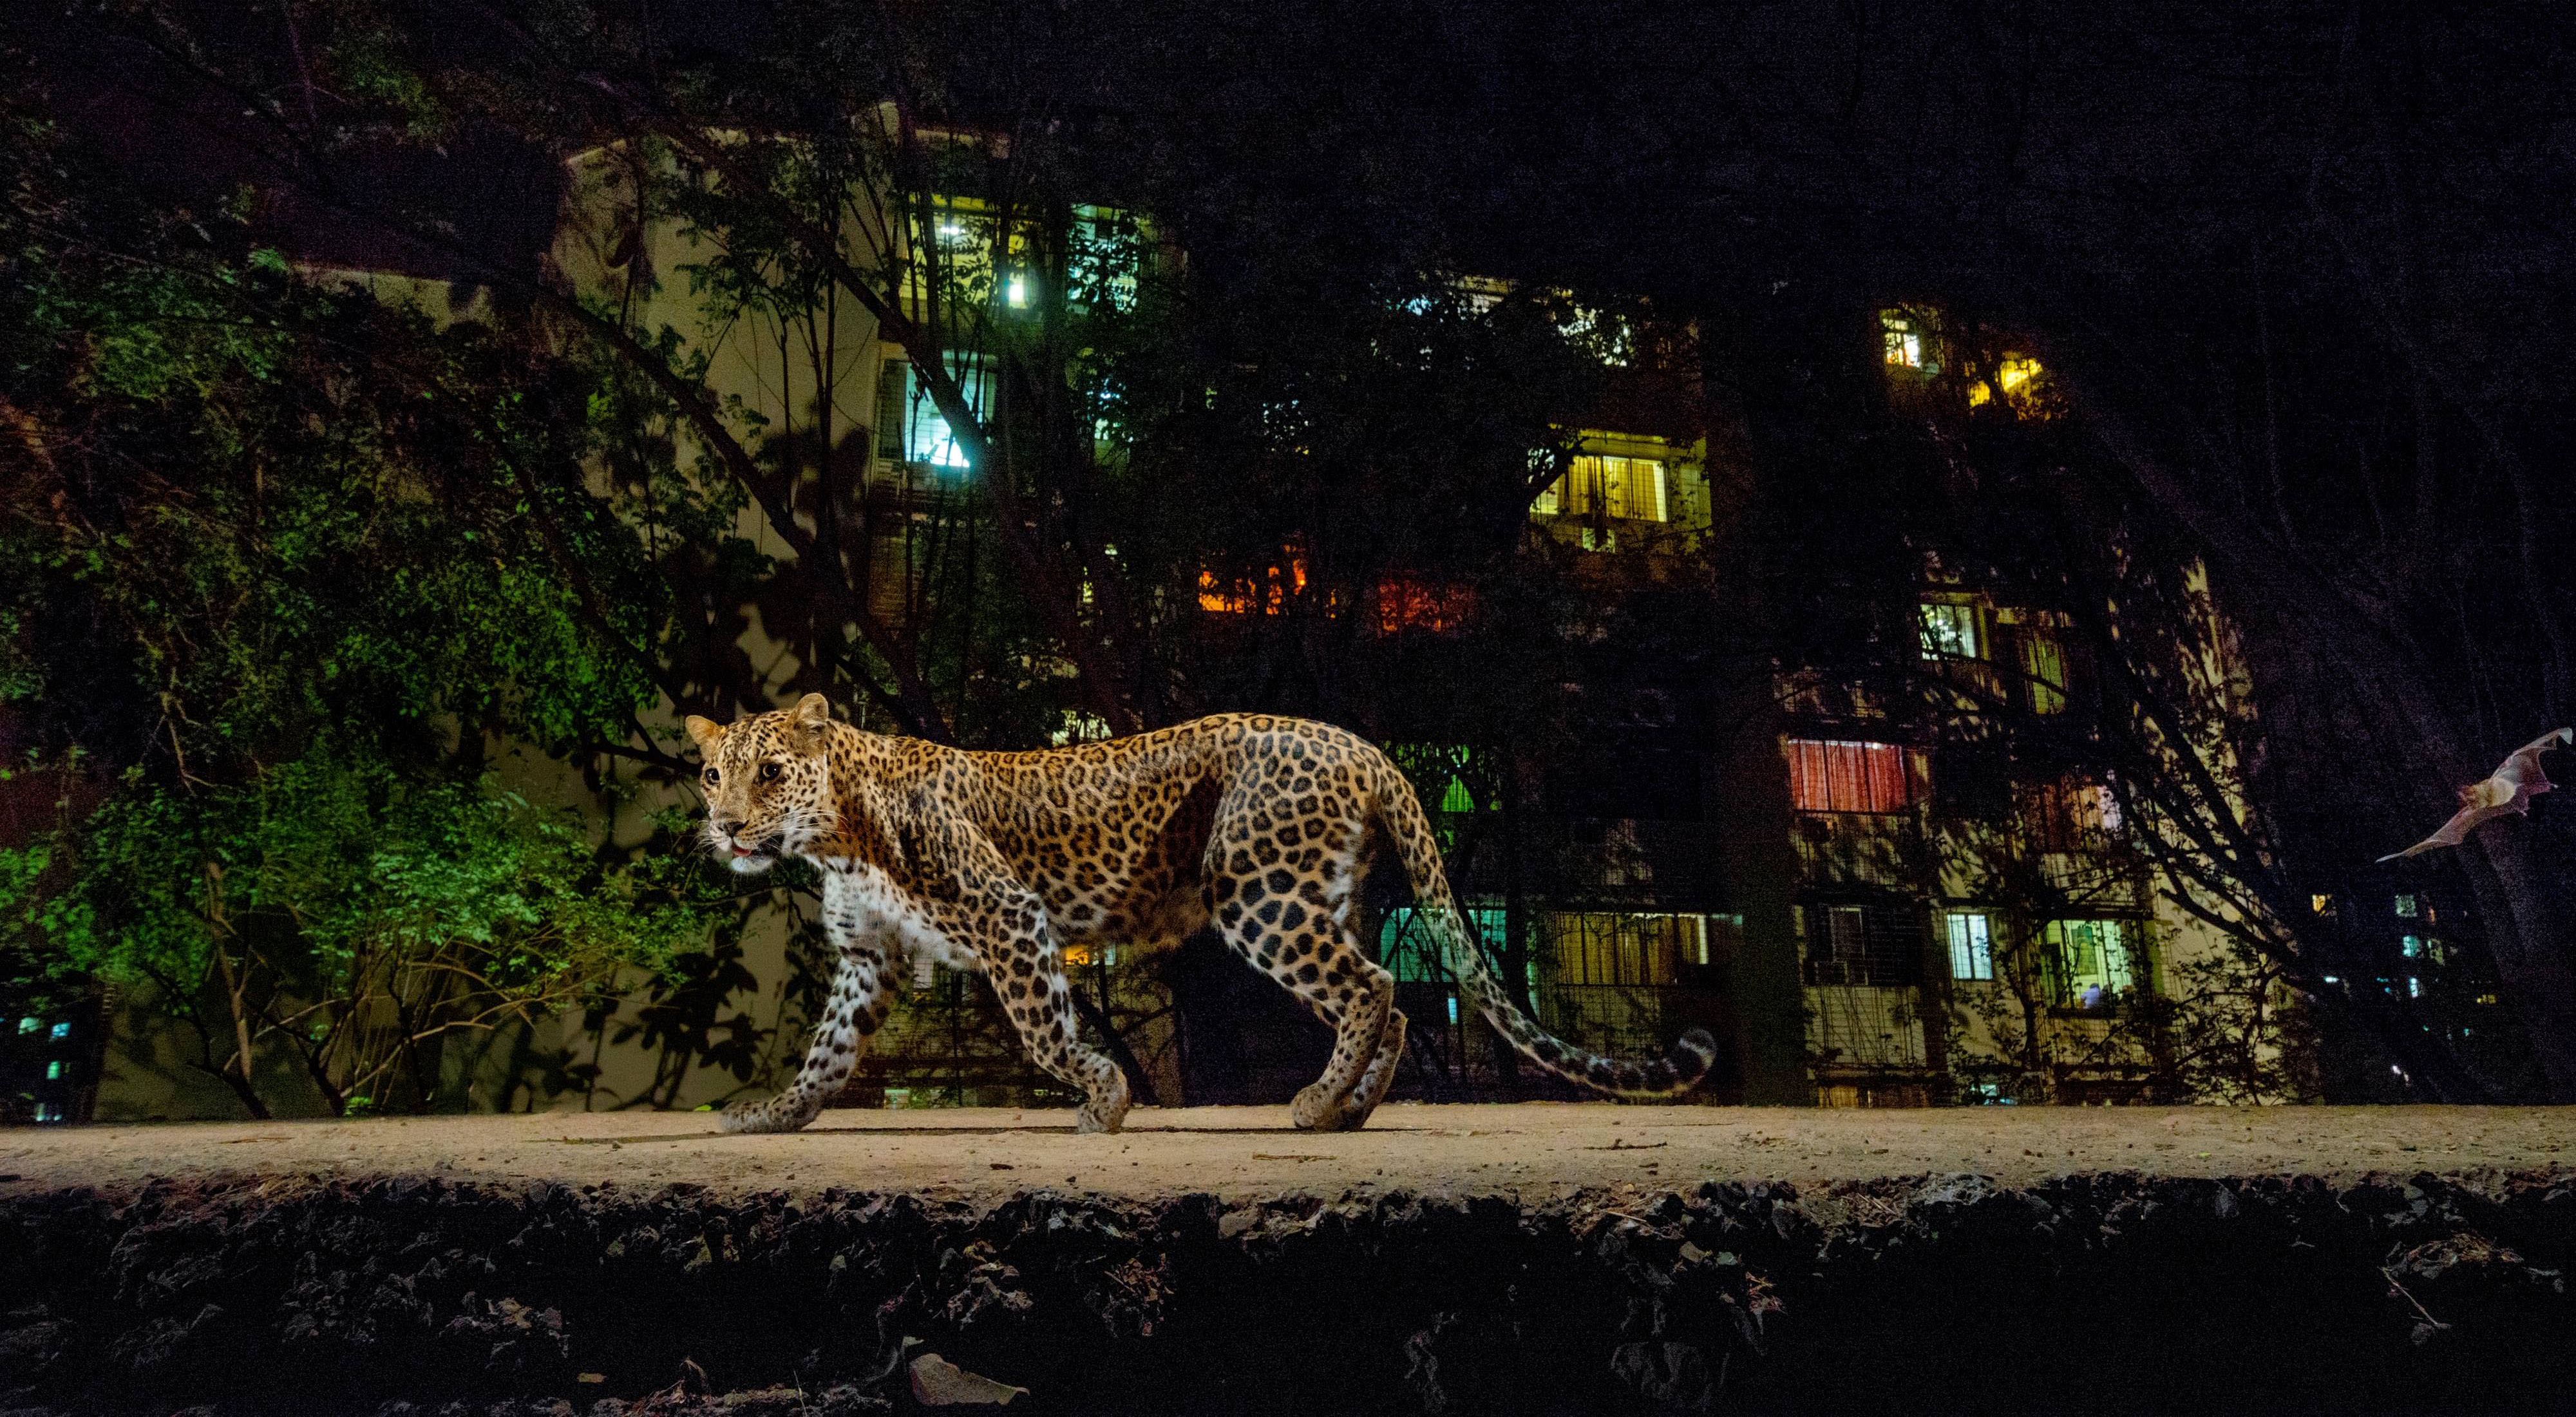 An urban Leopard in Mumbai, India at night 